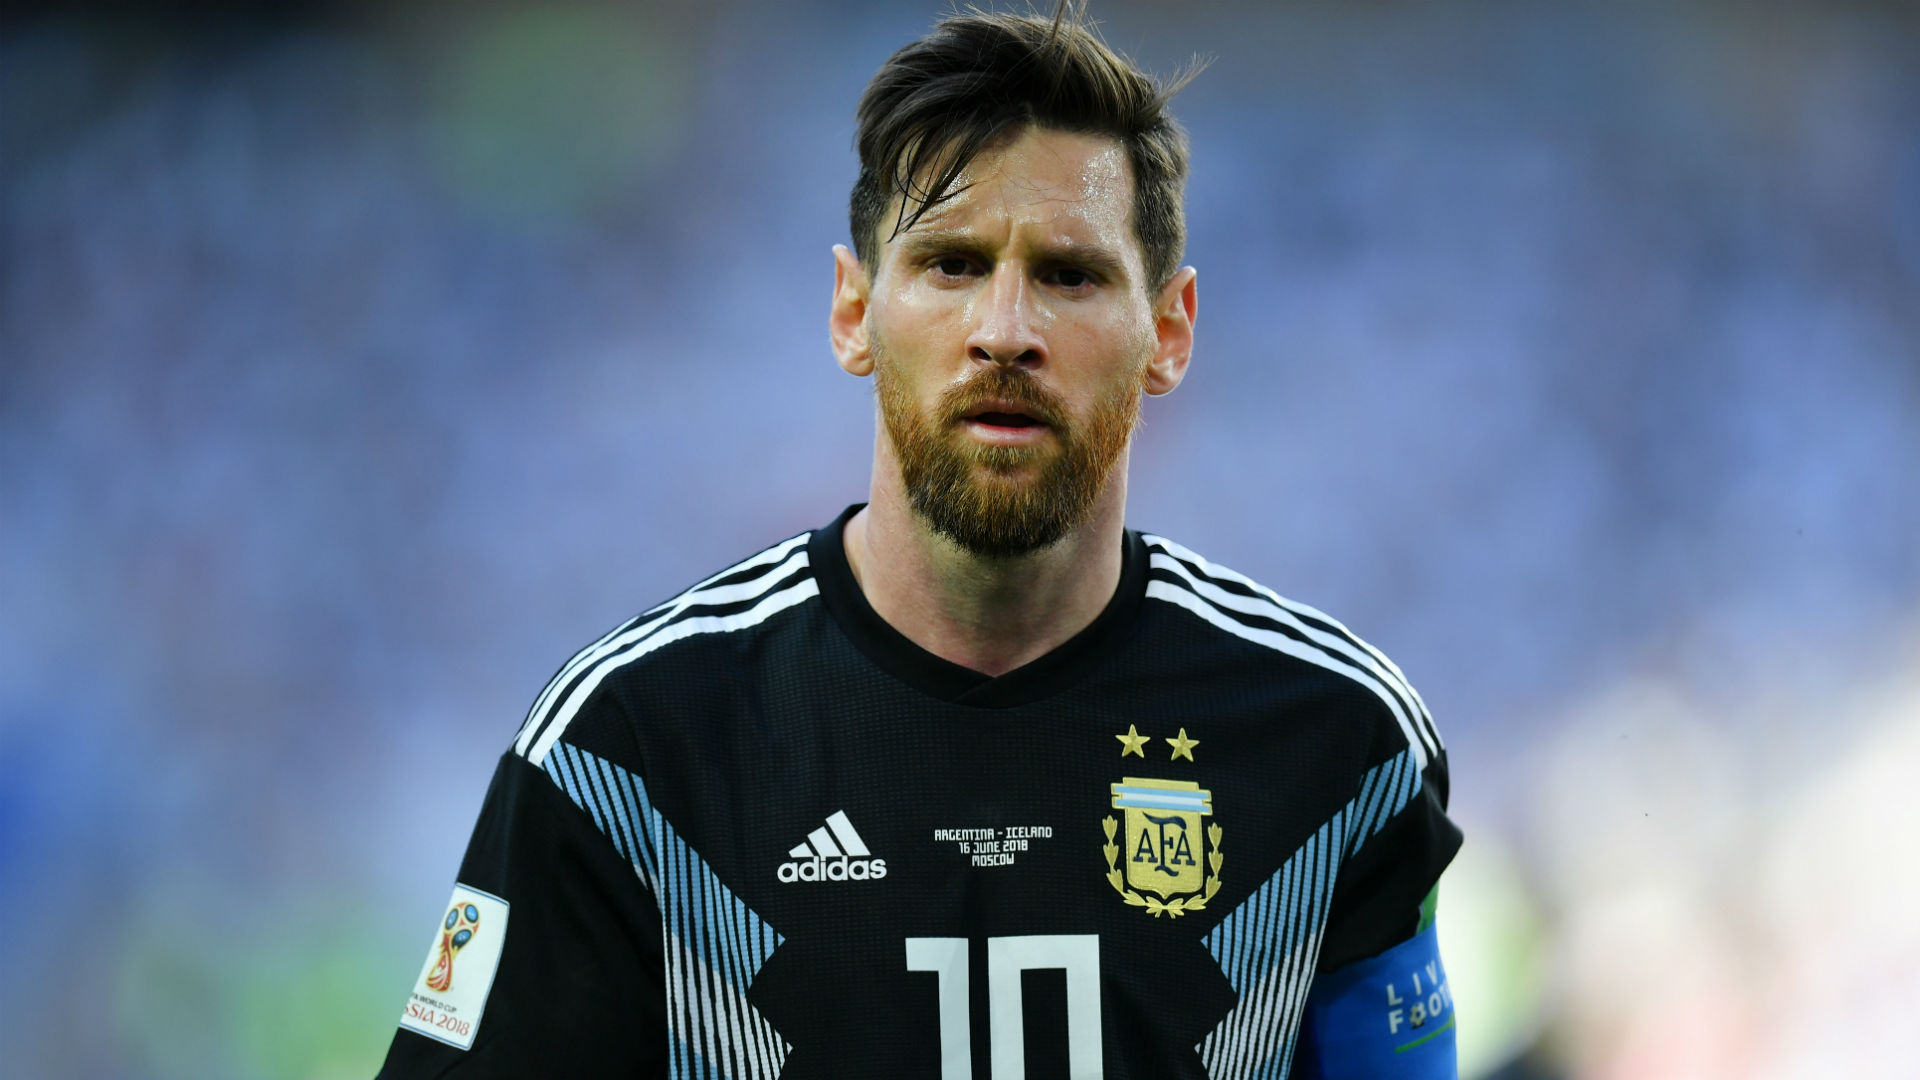 abeja Adviento patata Messi's Match Shirt, Argentina-Iceland 2018 - CharityStars